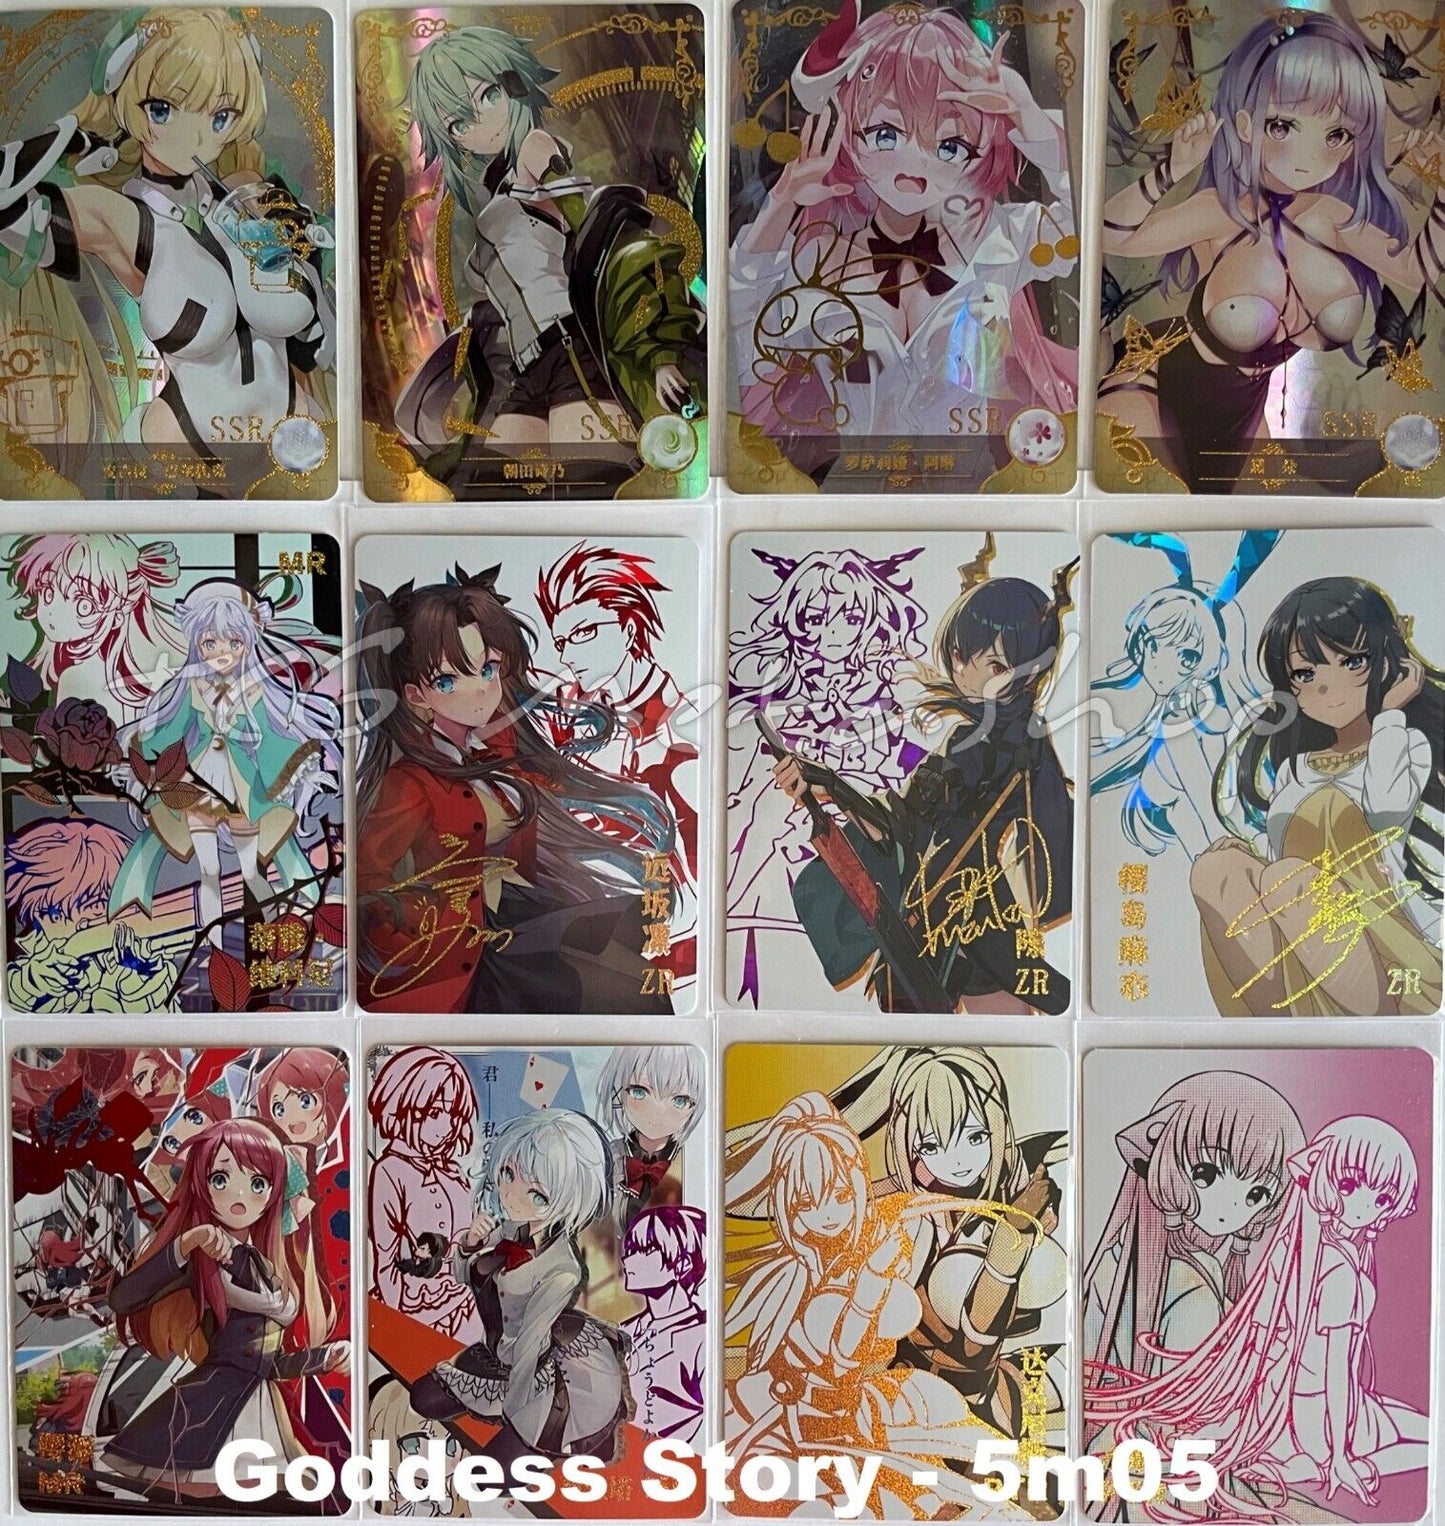 🔥 Goddess Story - 5m05 - [Pick Your Singles] Waifu Anime Doujin Cards 🔥